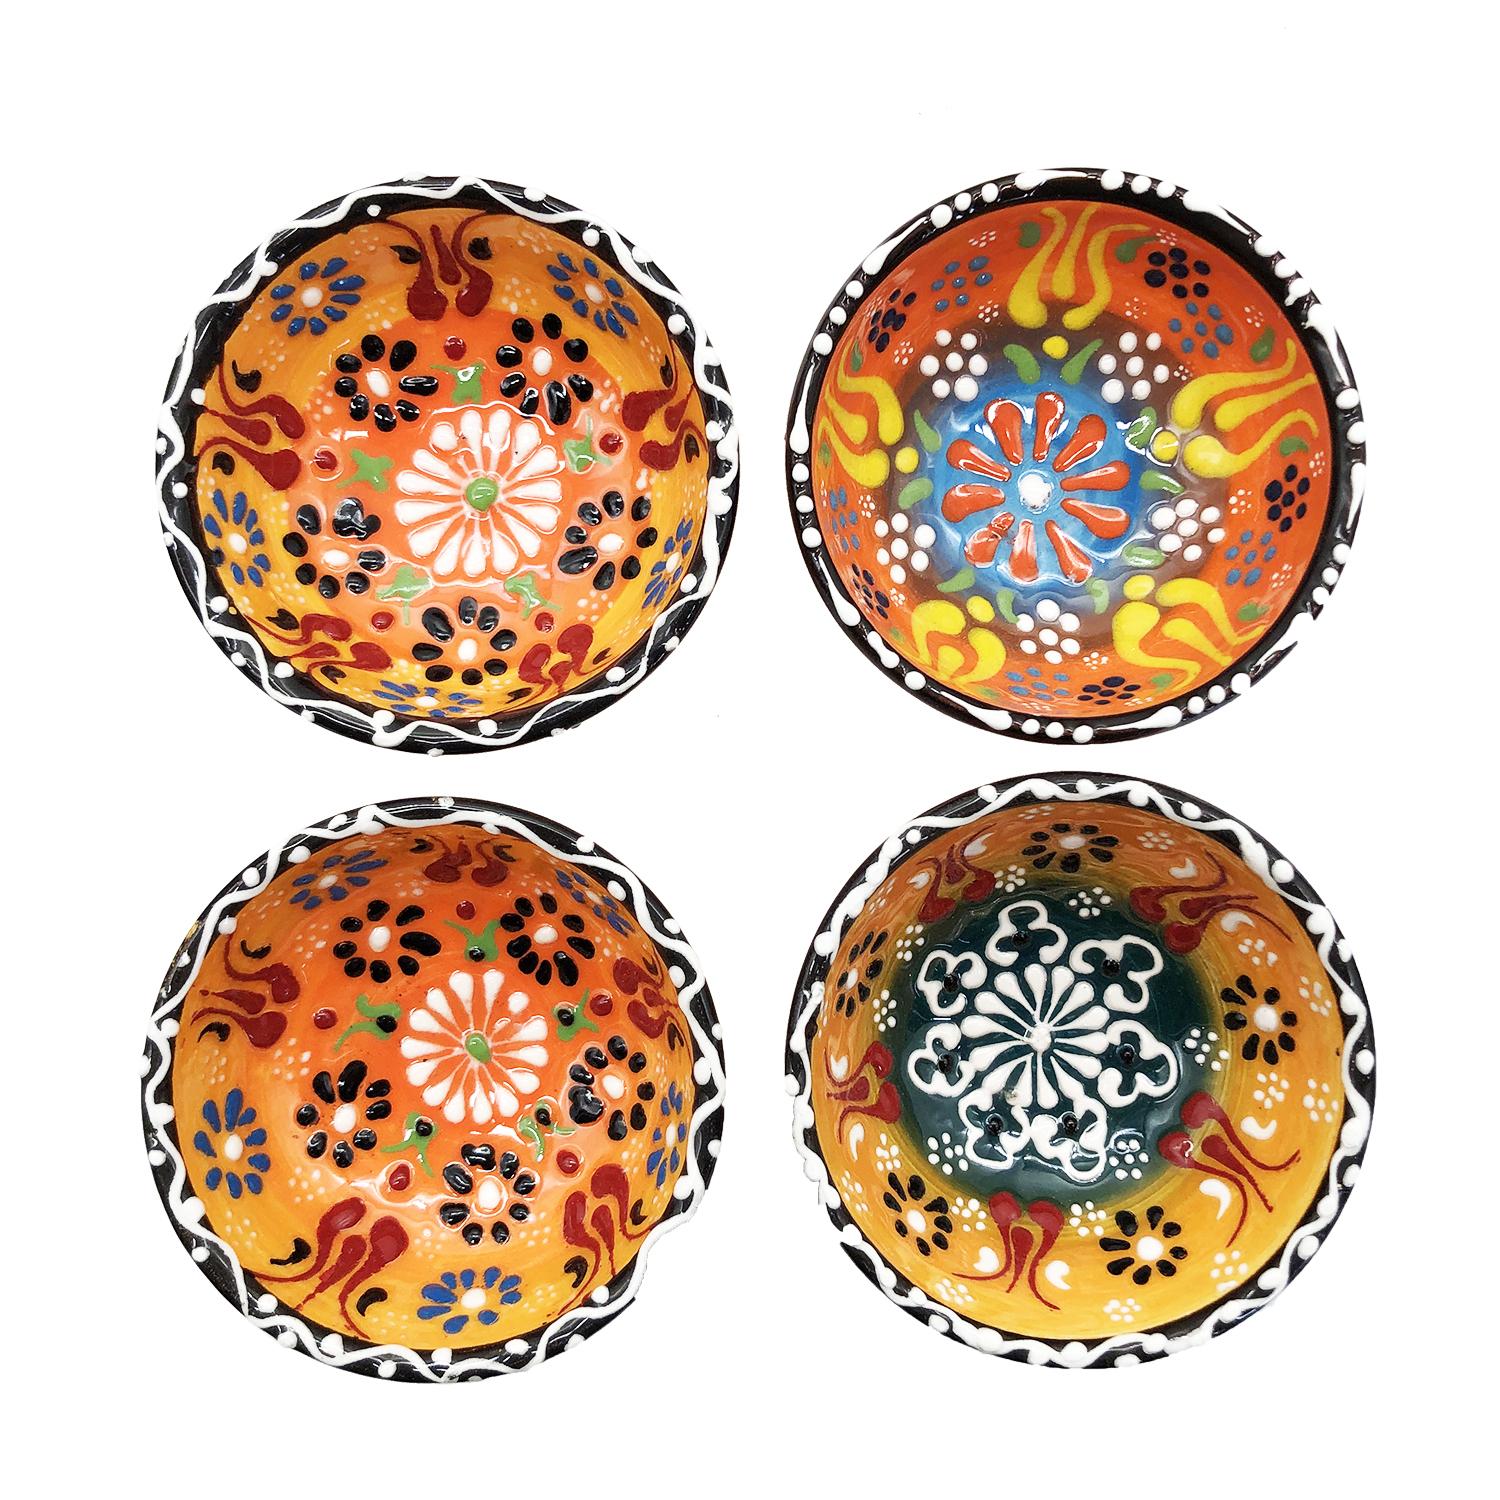 80MM手繪土耳其傳統工藝陶瓷碗， 土耳其餐具奧斯曼帝國浮雕圖案土耳其藝術時尚潮物(VTR-CERAMIC-BOWL-80MM-30003)